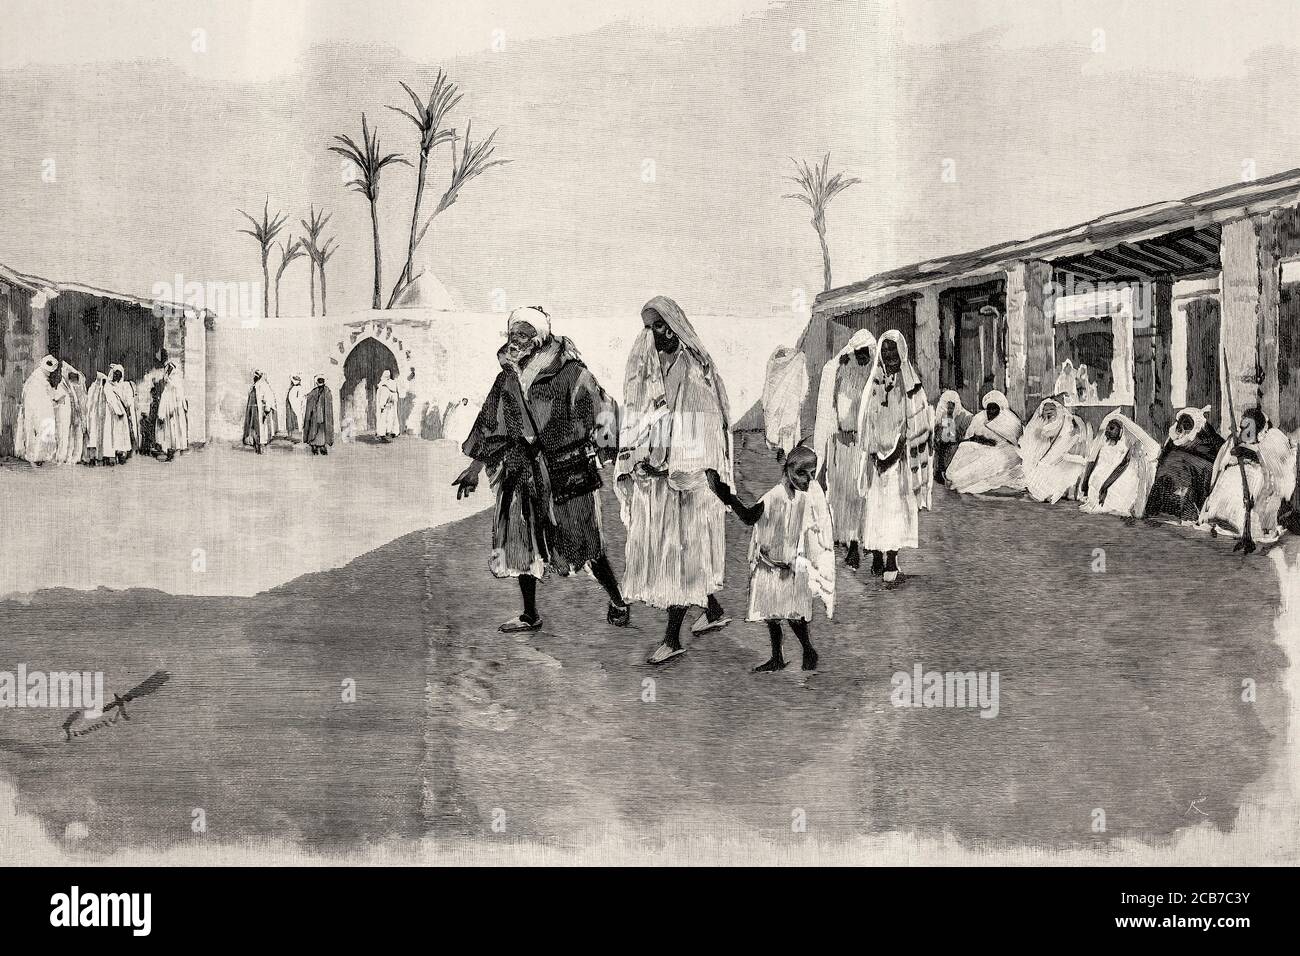 Der Sklavenmarkt in Marrakesch, Marokko. Alte XIX Jahrhundert gravierte Illustration von La Ilustracion Española y Americana 1894 Stockfoto